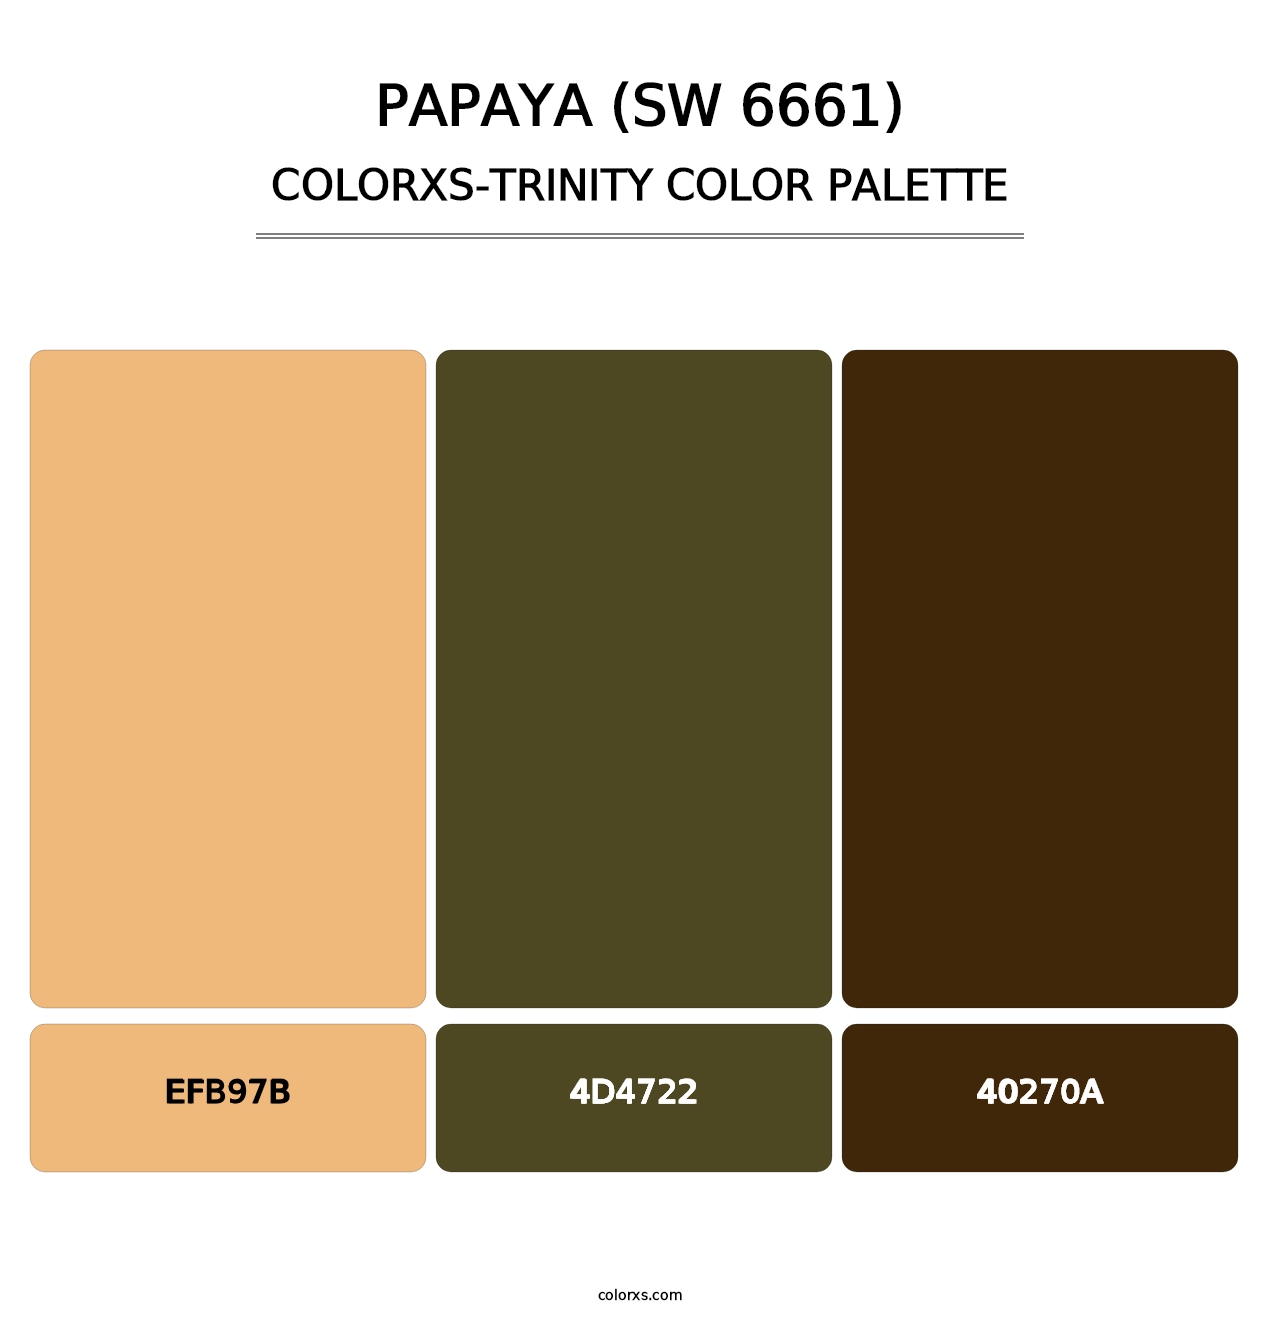 Papaya (SW 6661) - Colorxs Trinity Palette